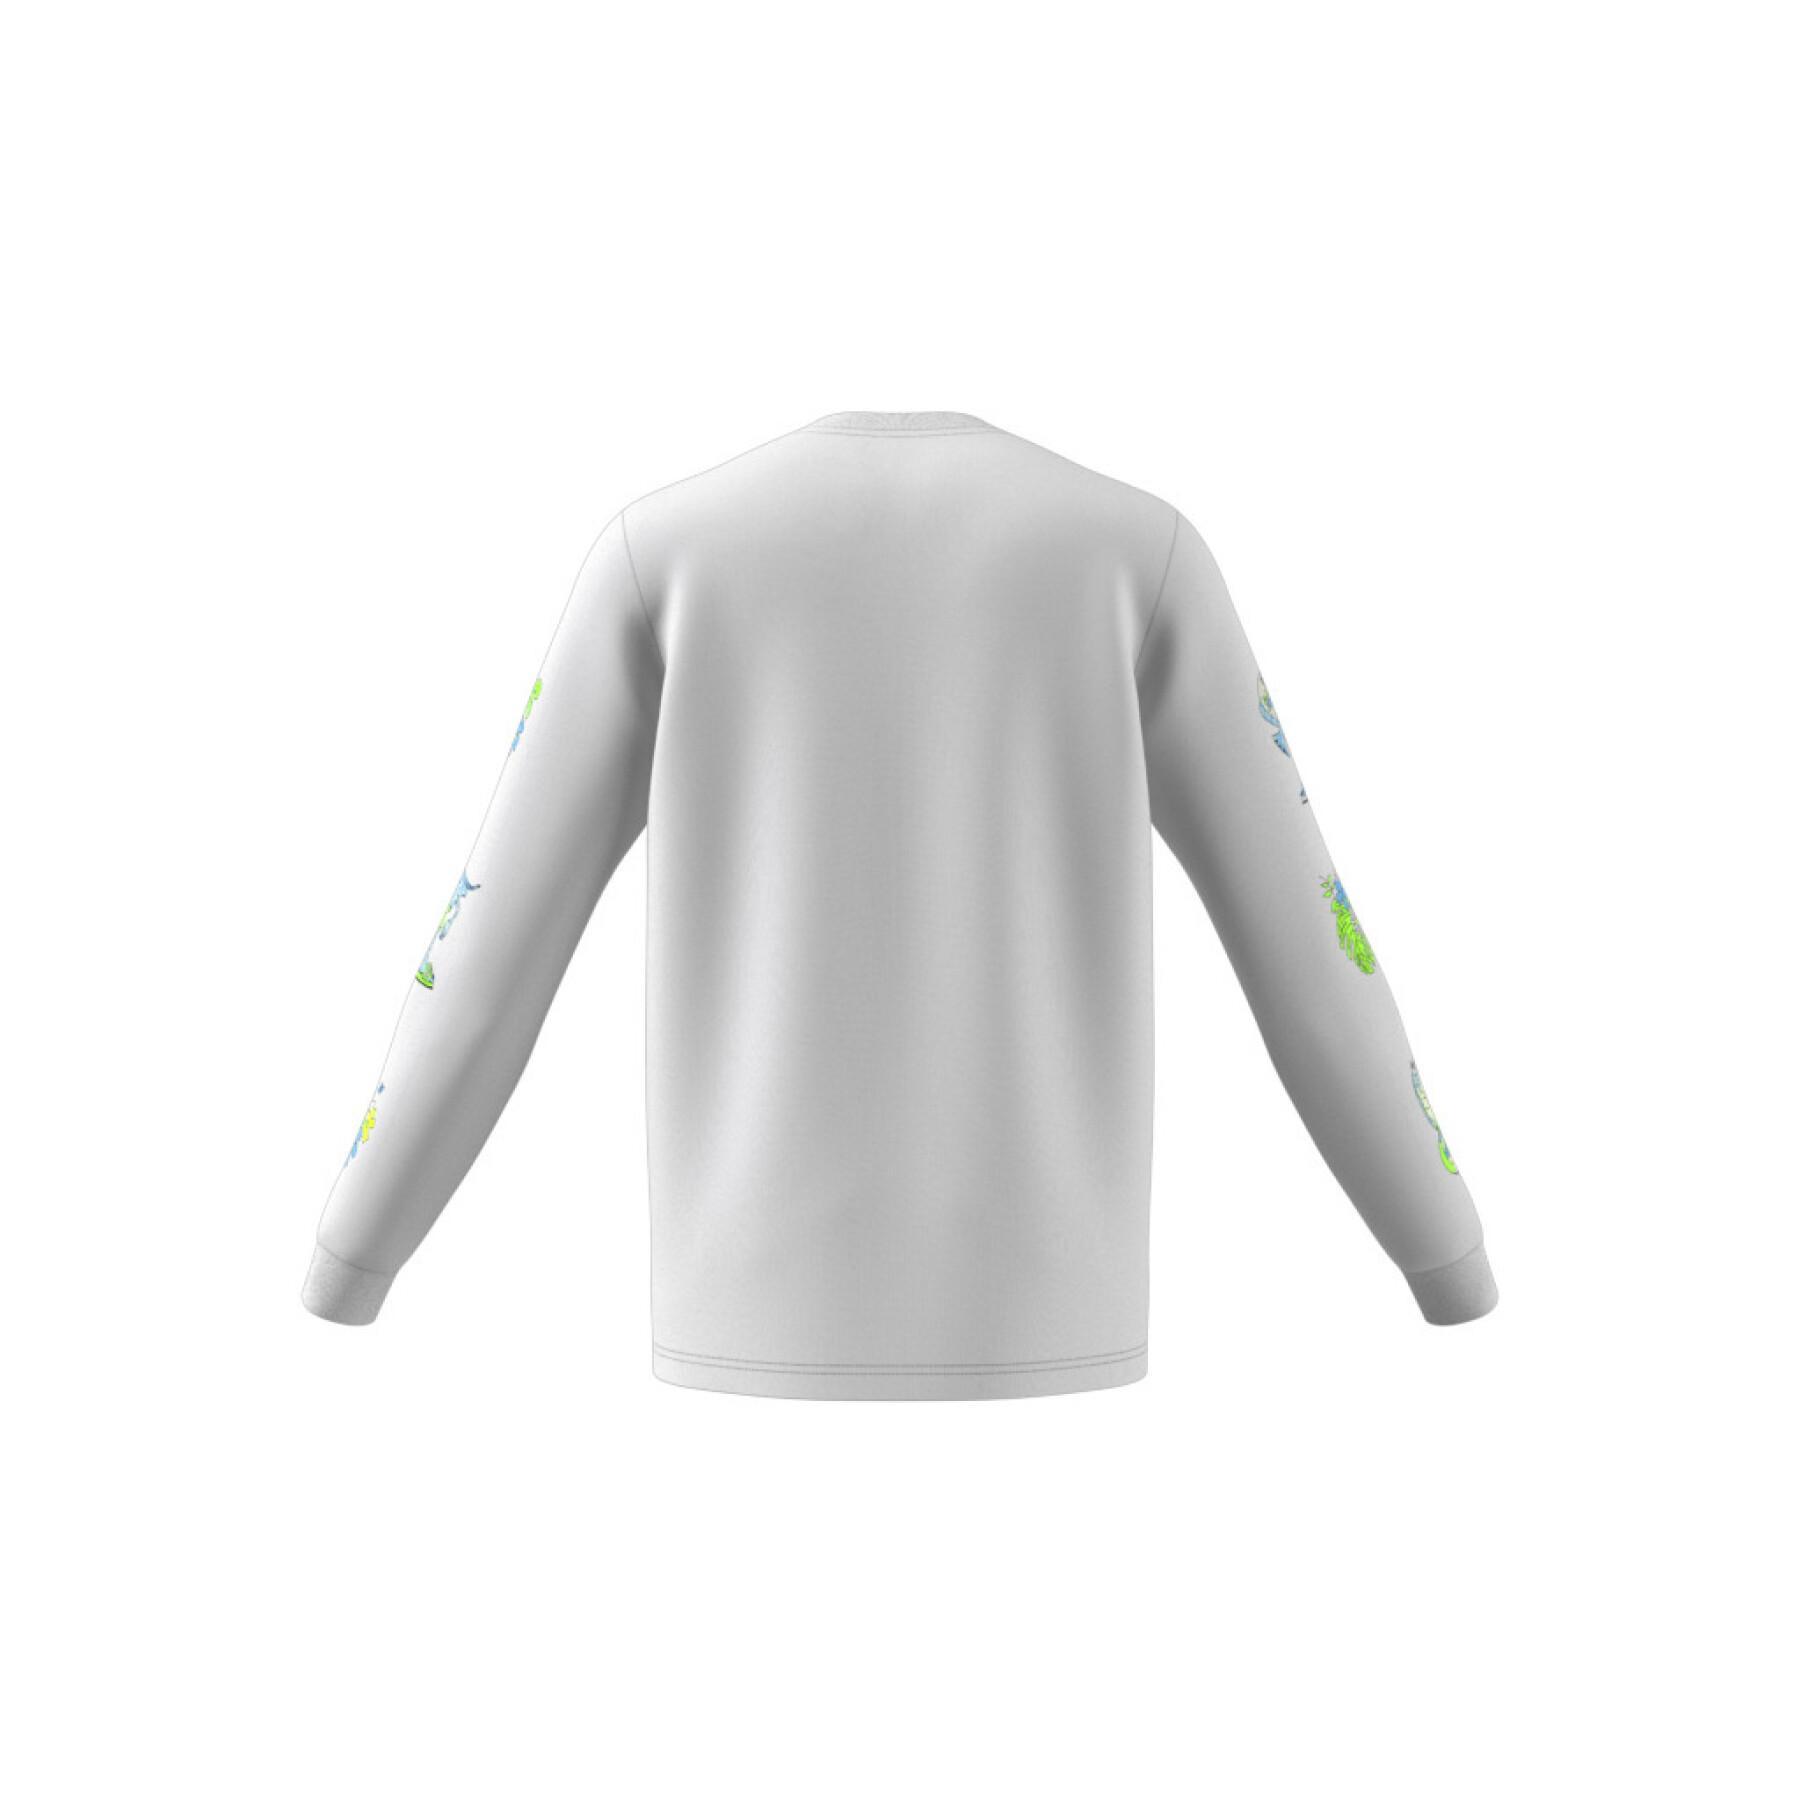 Long sleeve T-shirt adidas Originals Graphic Stoked Fish